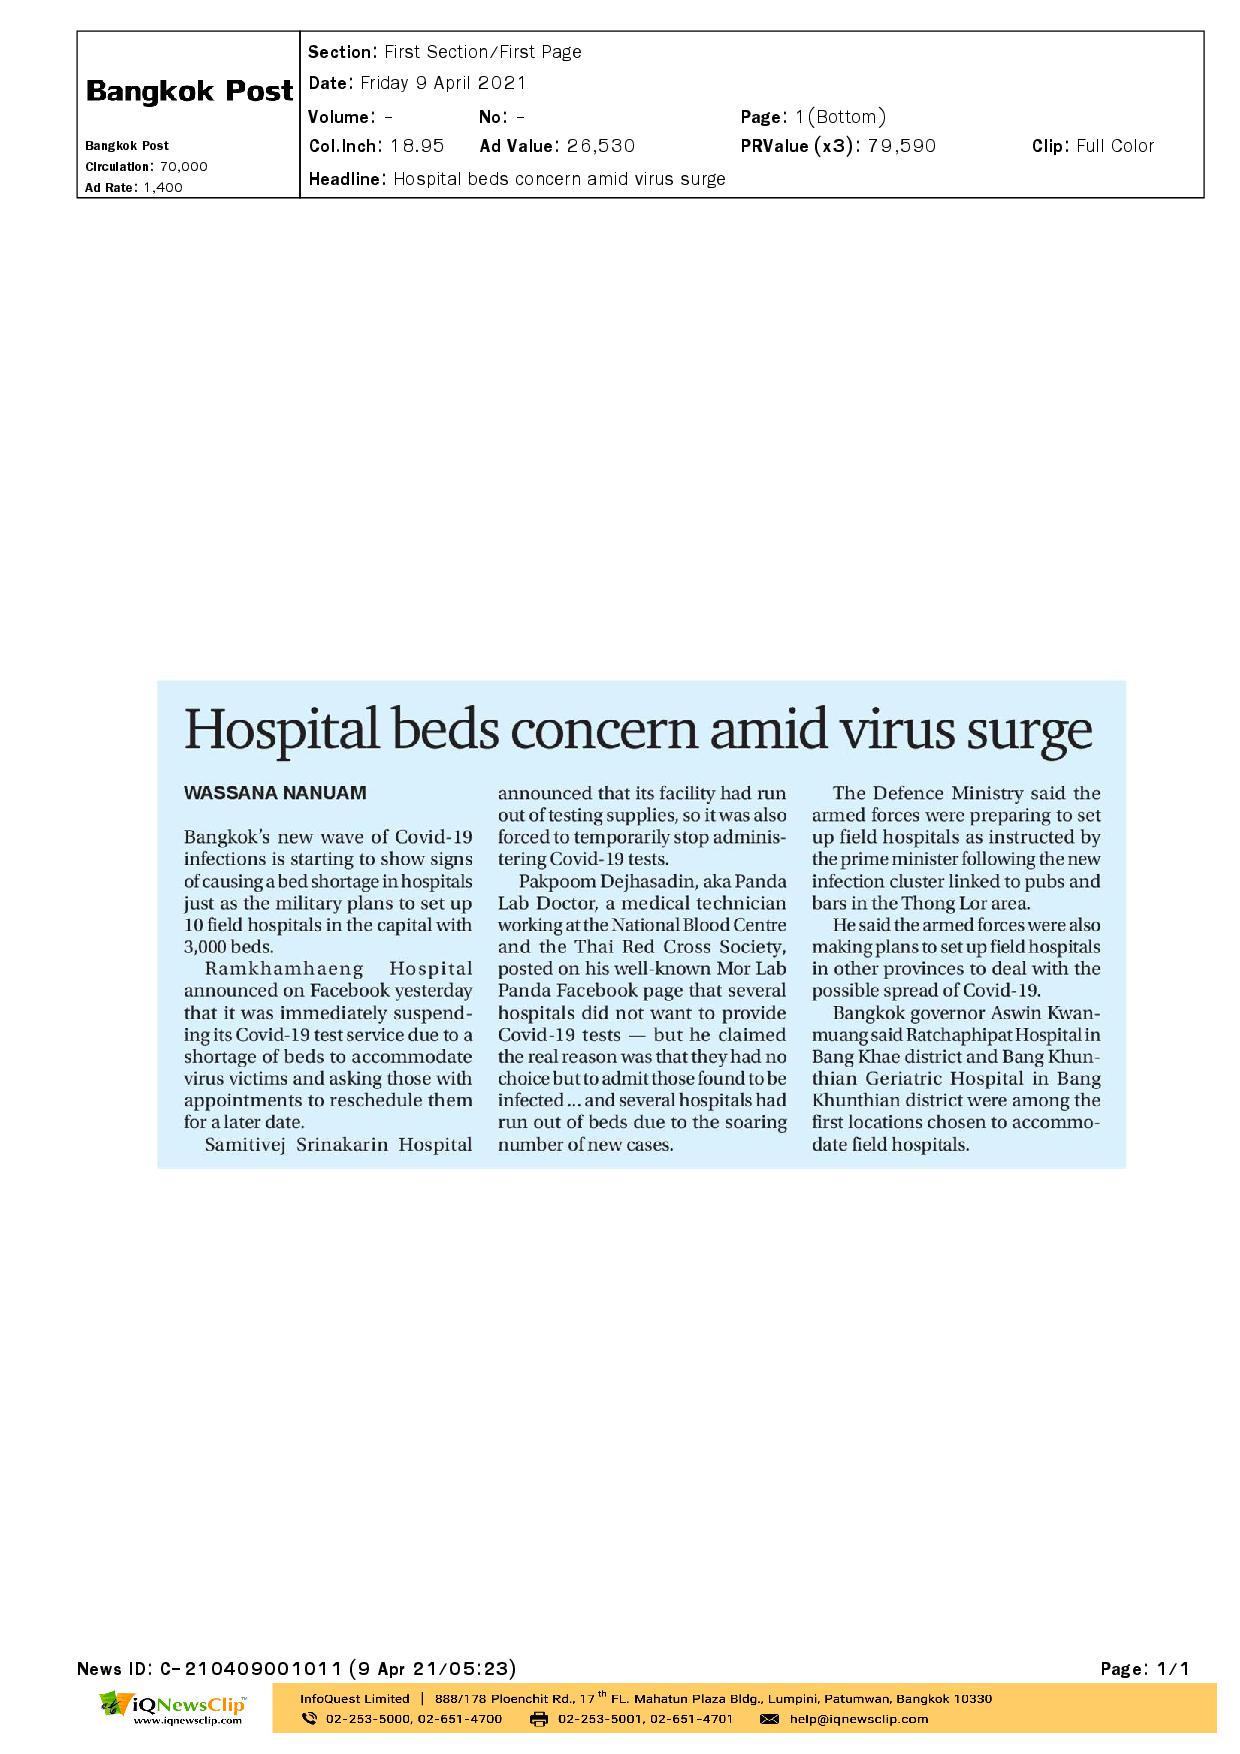 Hospital beds concern amid virus surge